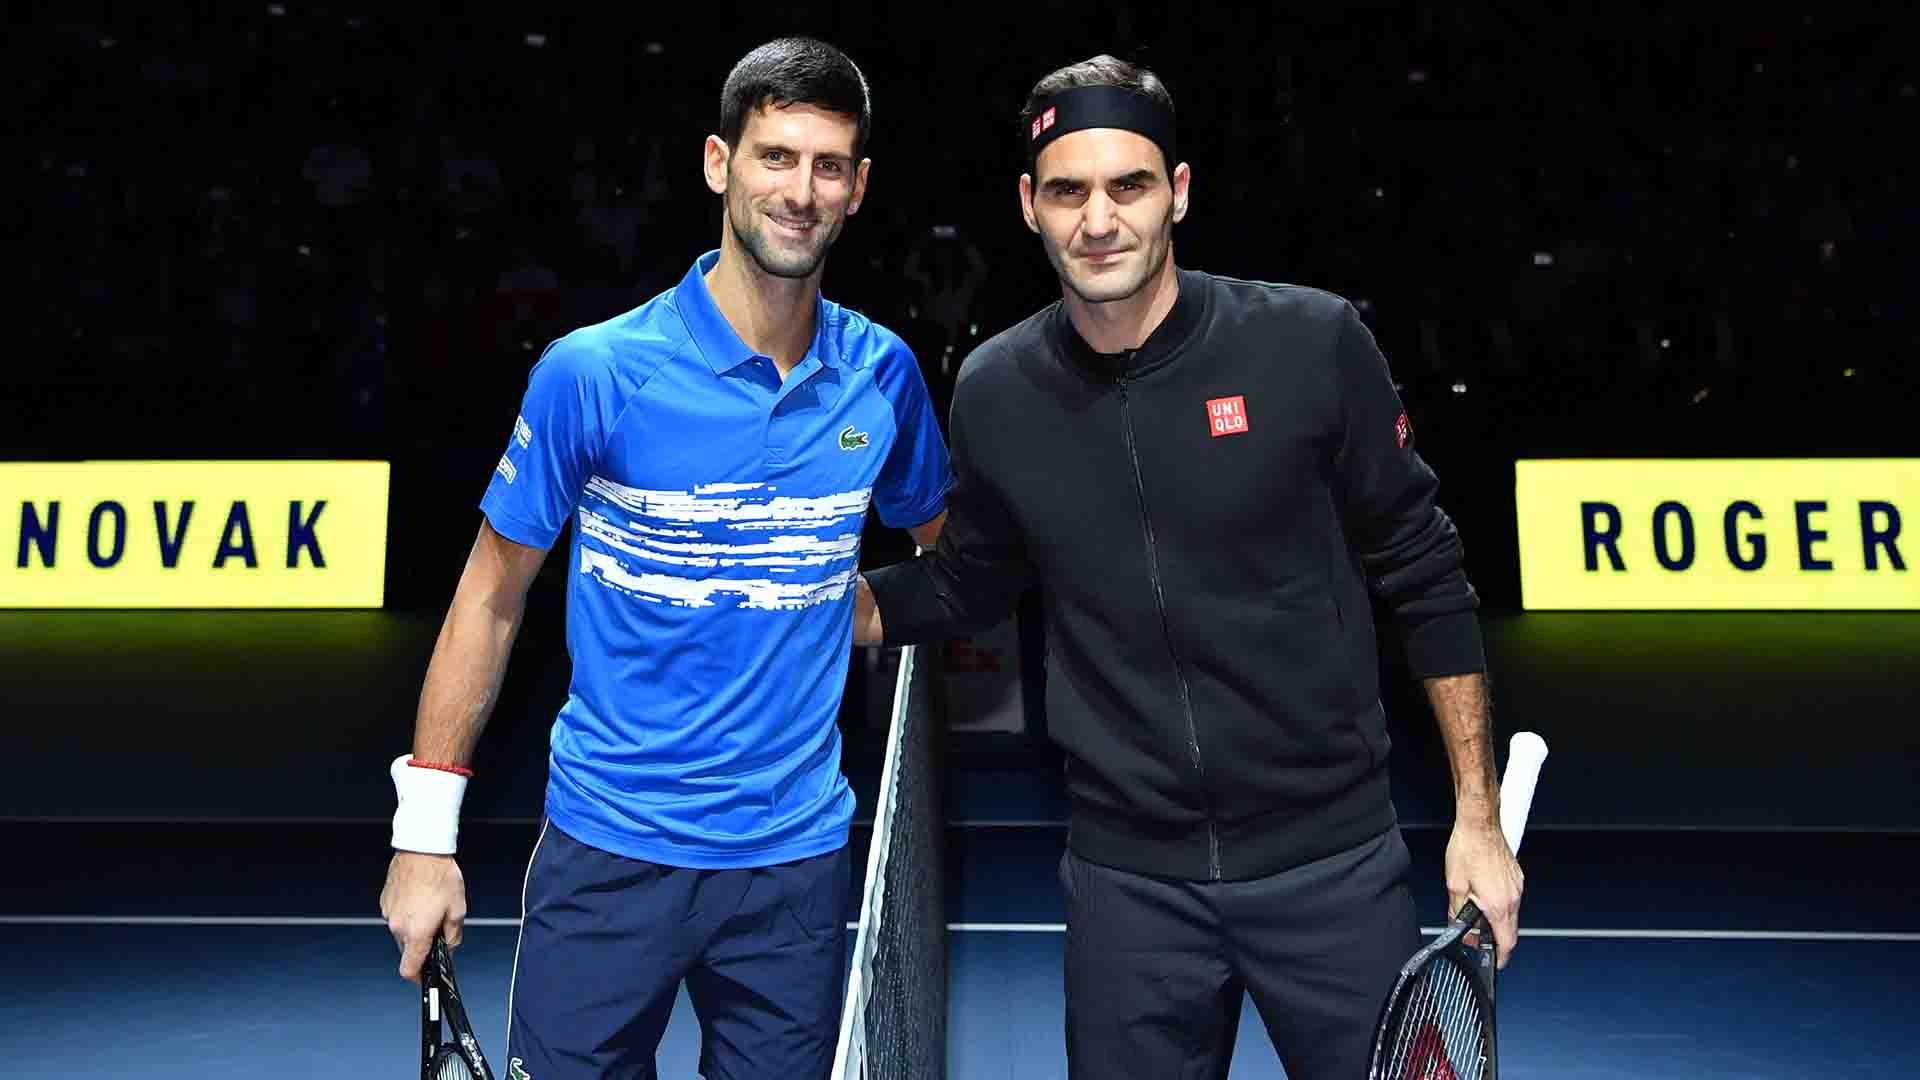 <a href='https://www.atptour.com/en/players/novak-djokovic/d643/overview'>Novak Djokovic</a> leads <a href='https://www.atptour.com/en/players/roger-federer/f324/overview'>Roger Federer</a> 19-18 in hard-court encounters.